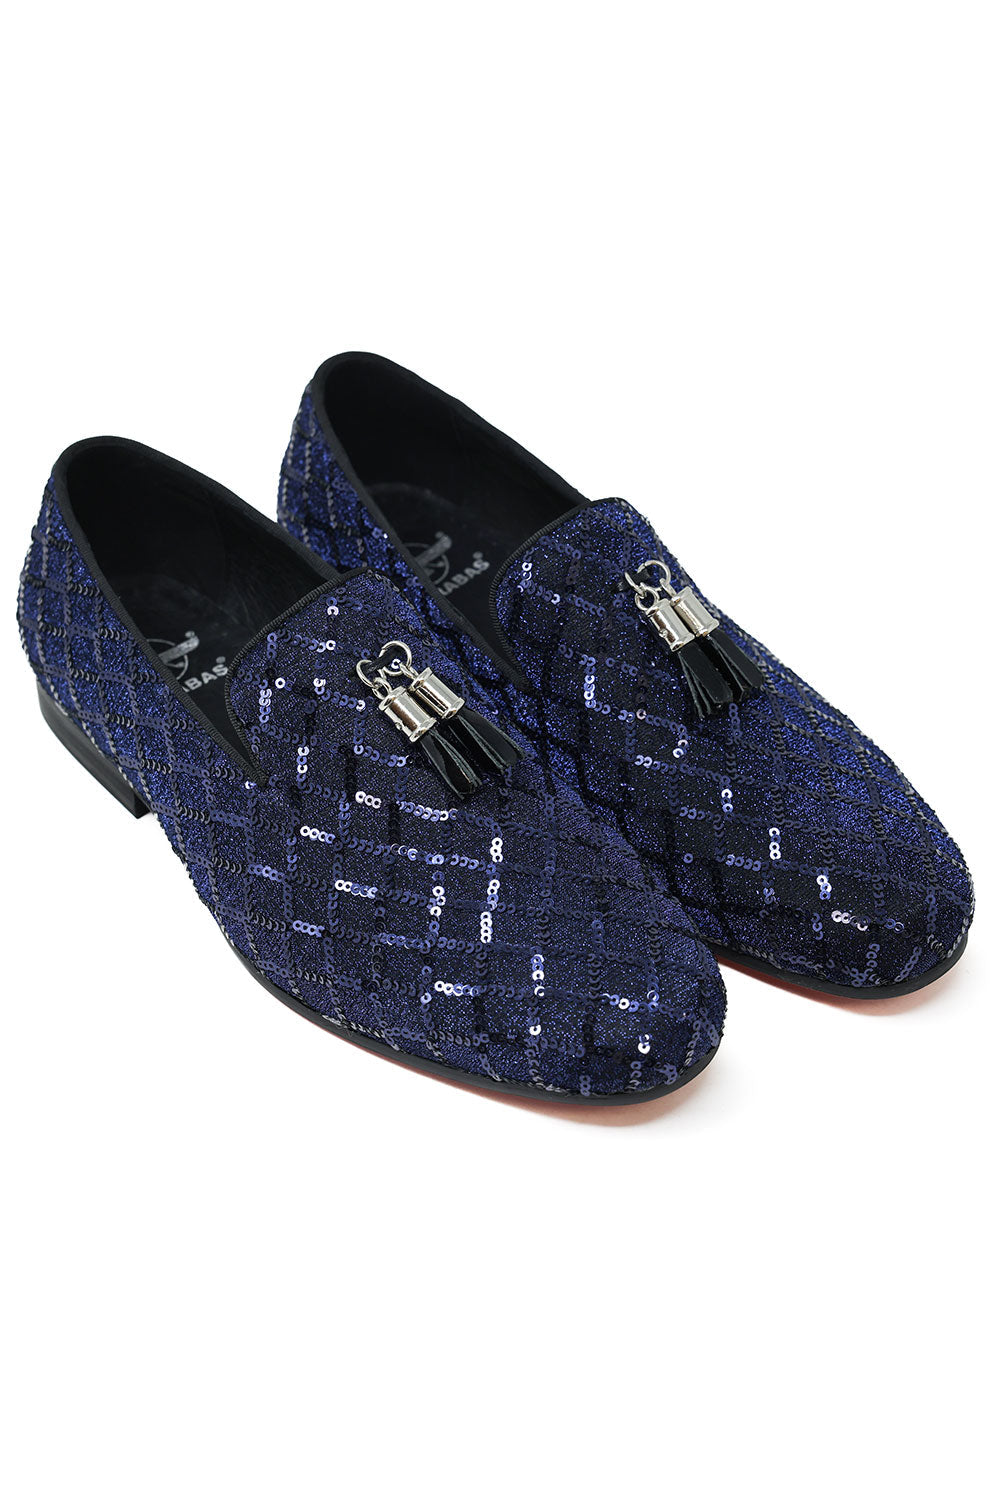 Barabas Men's Sequin Design Tassel Slip On Loafer Shoes 2SH3099 Navy